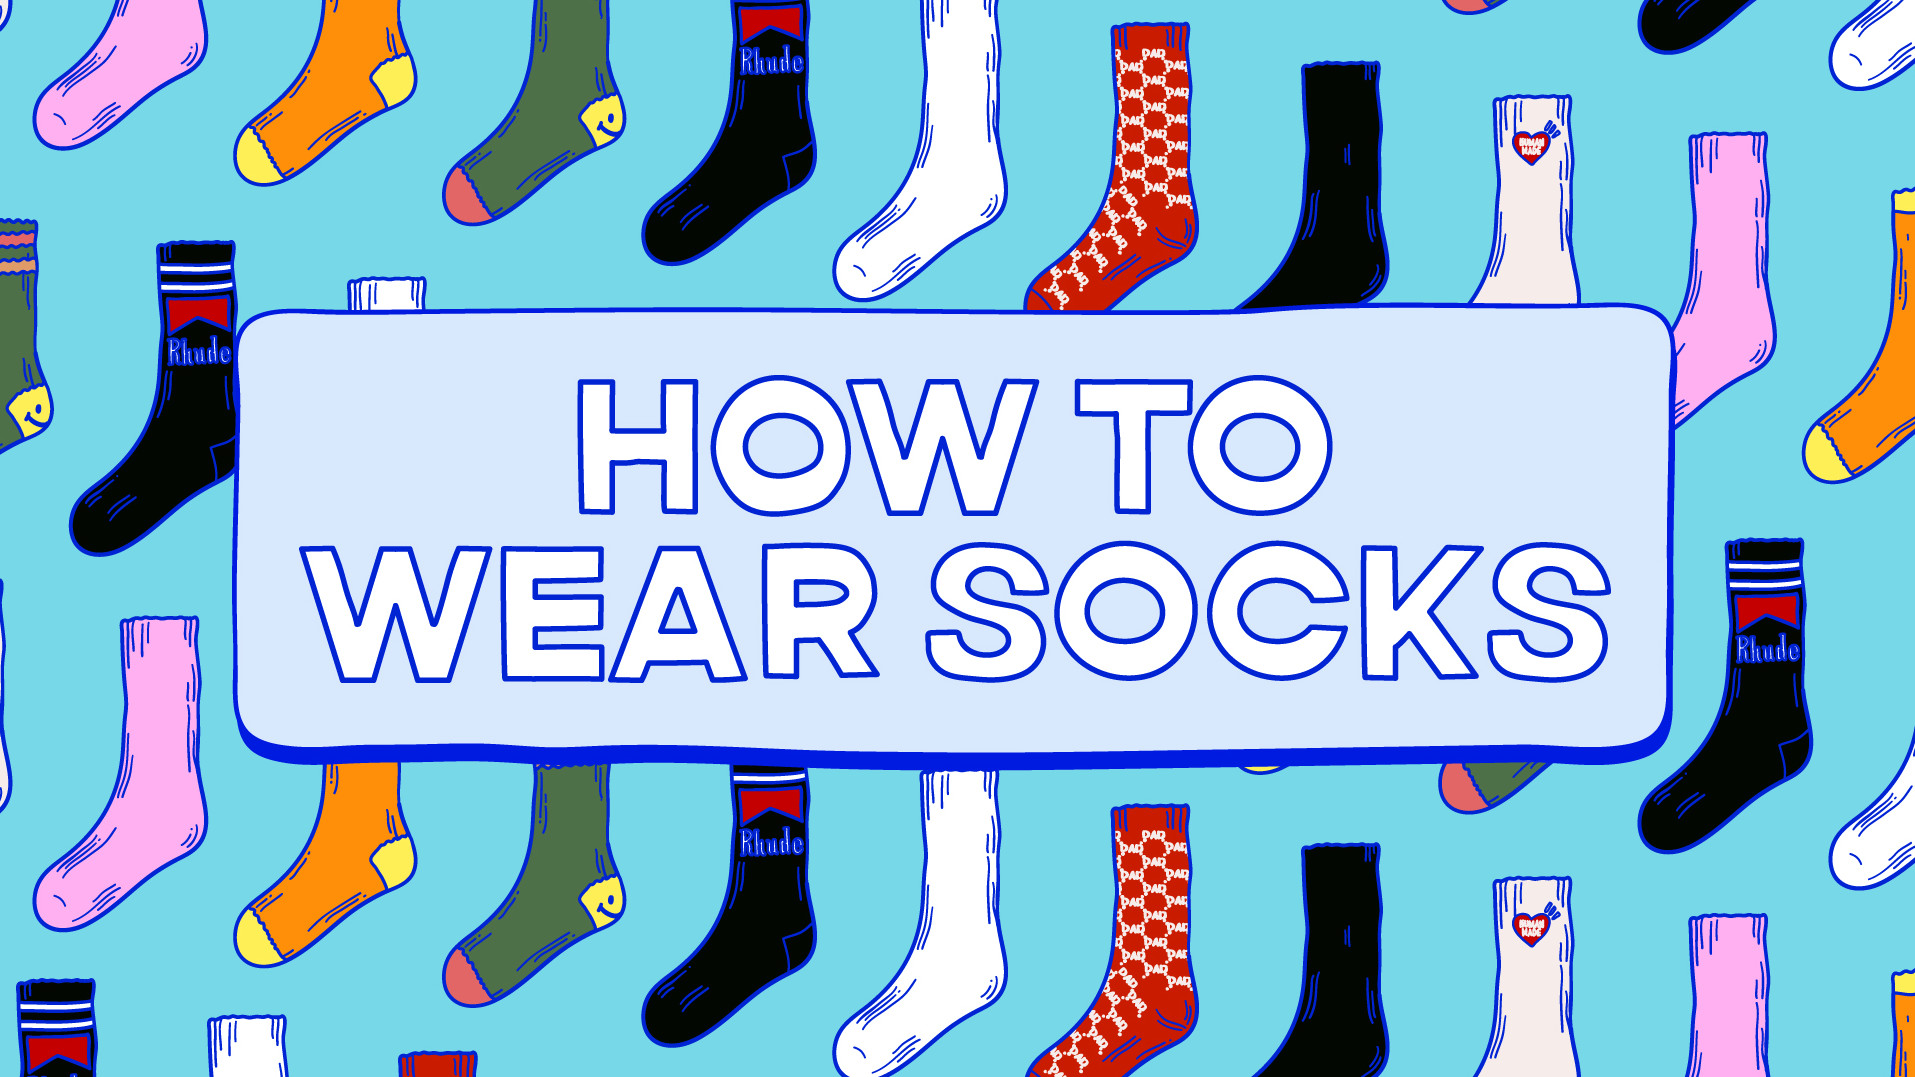 Why do we wear socks?